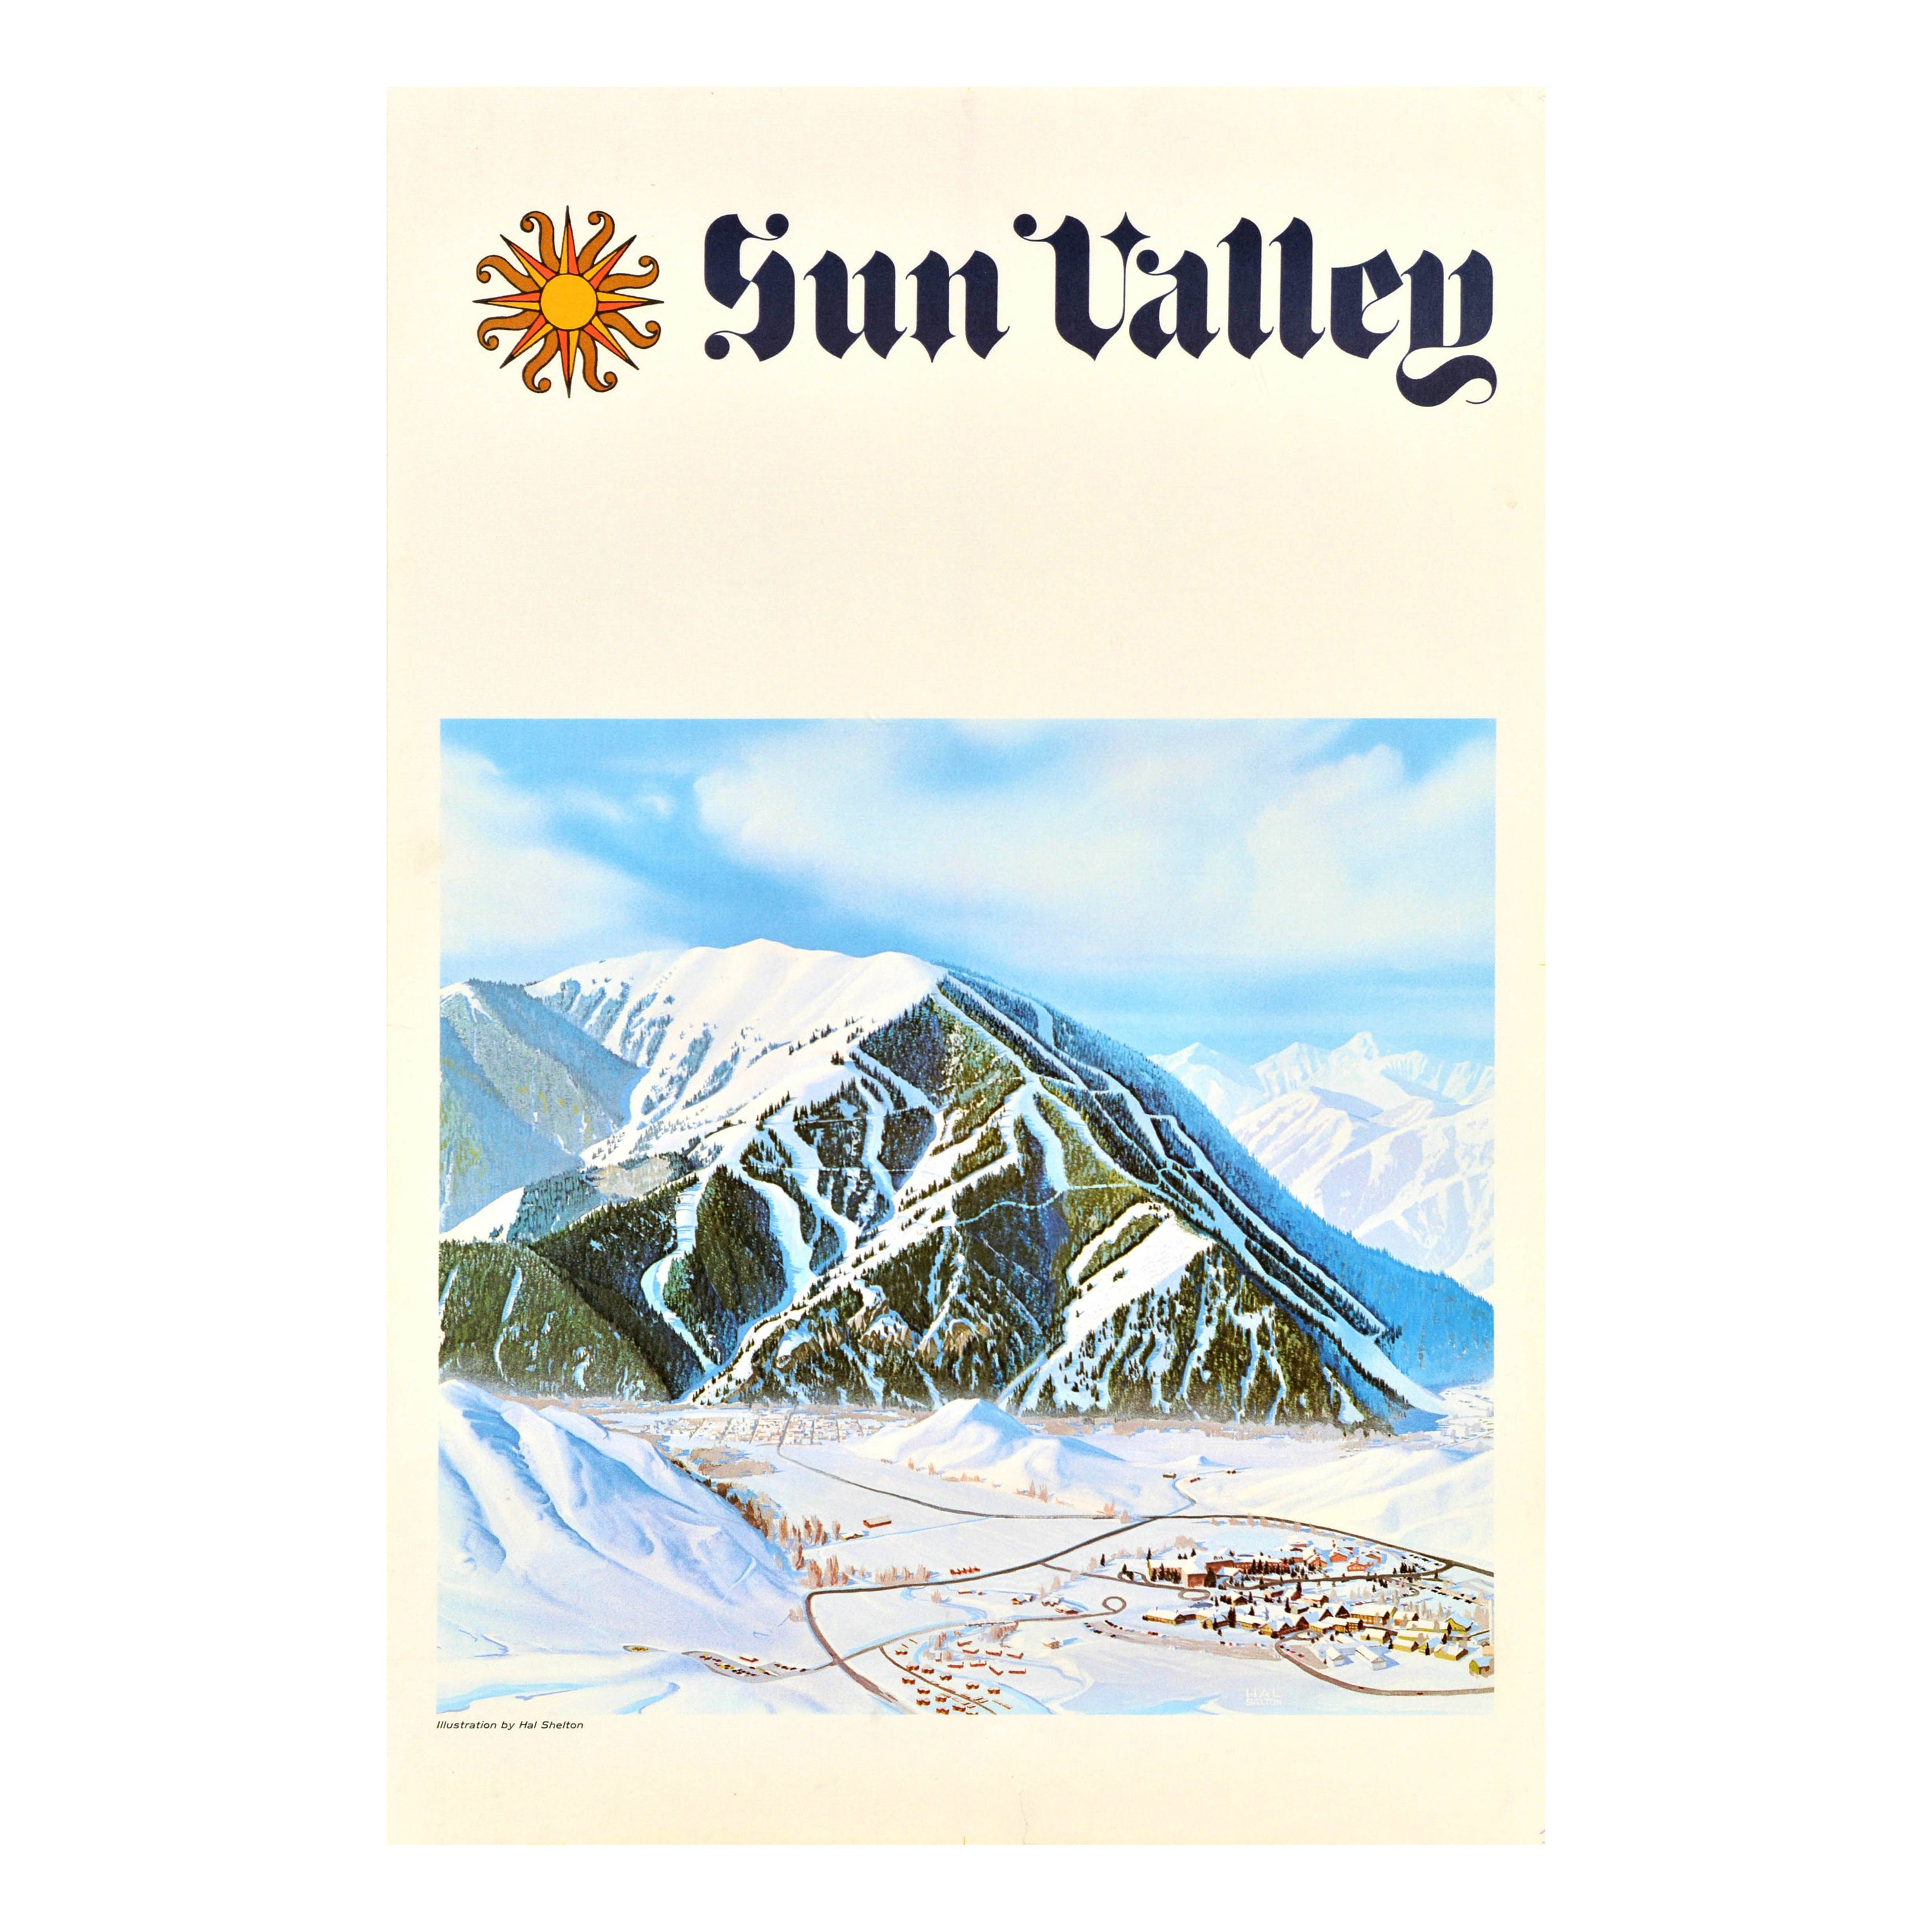 Original Vintage Winter Travel Poster Sun Valley Idaho Ski Resort Bald Mountain For Sale